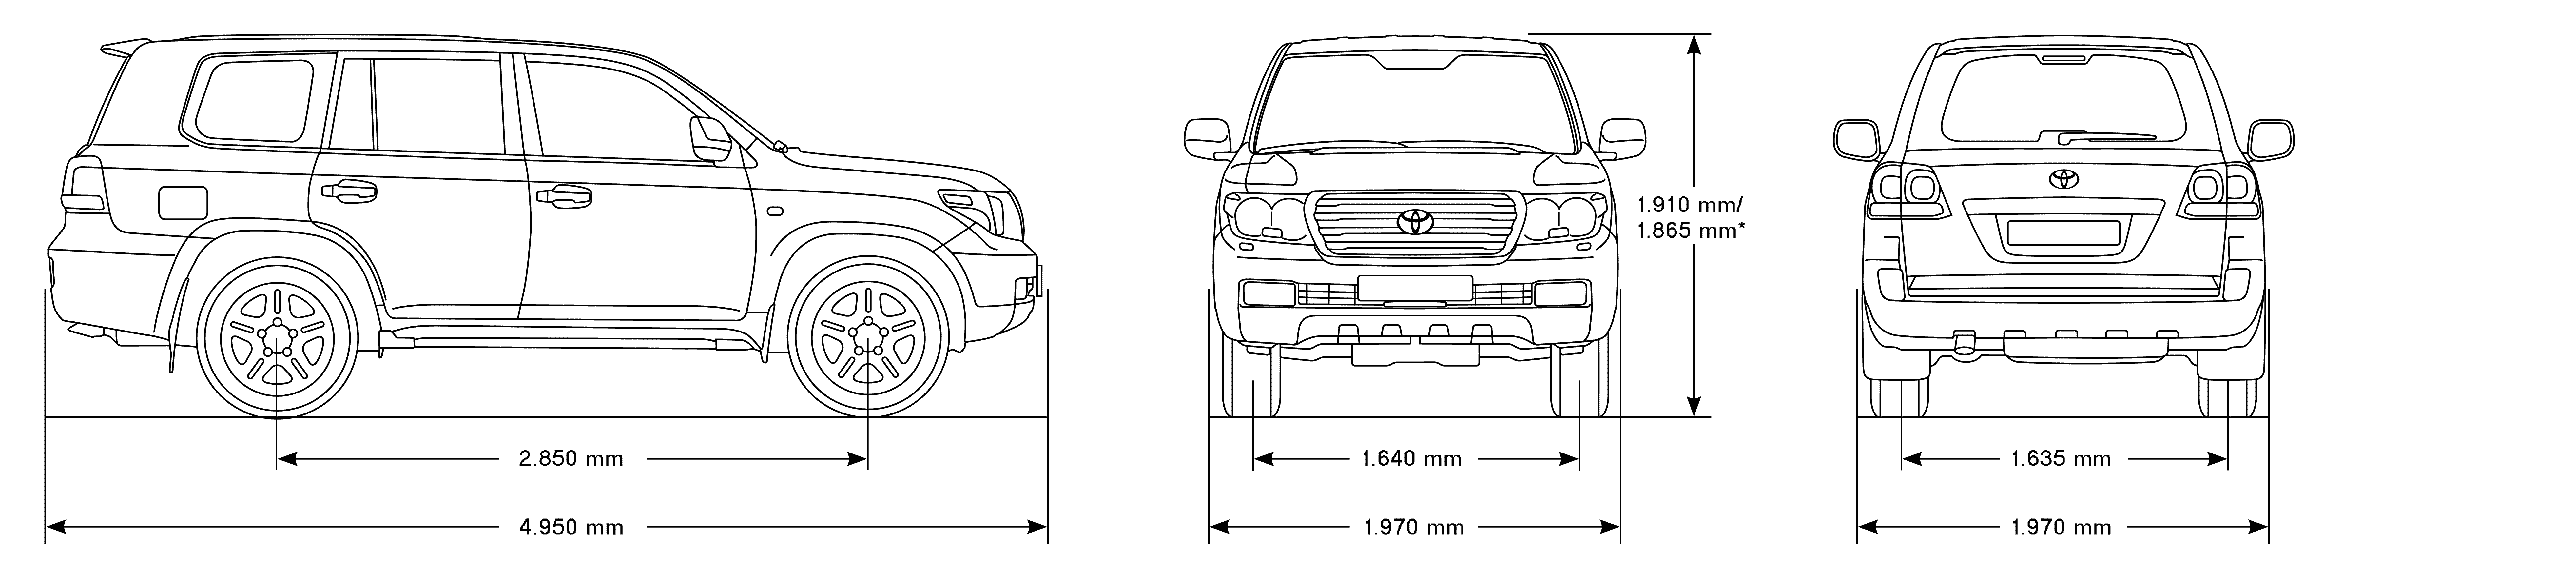 Toyota Land Cruiser 200 blueprint